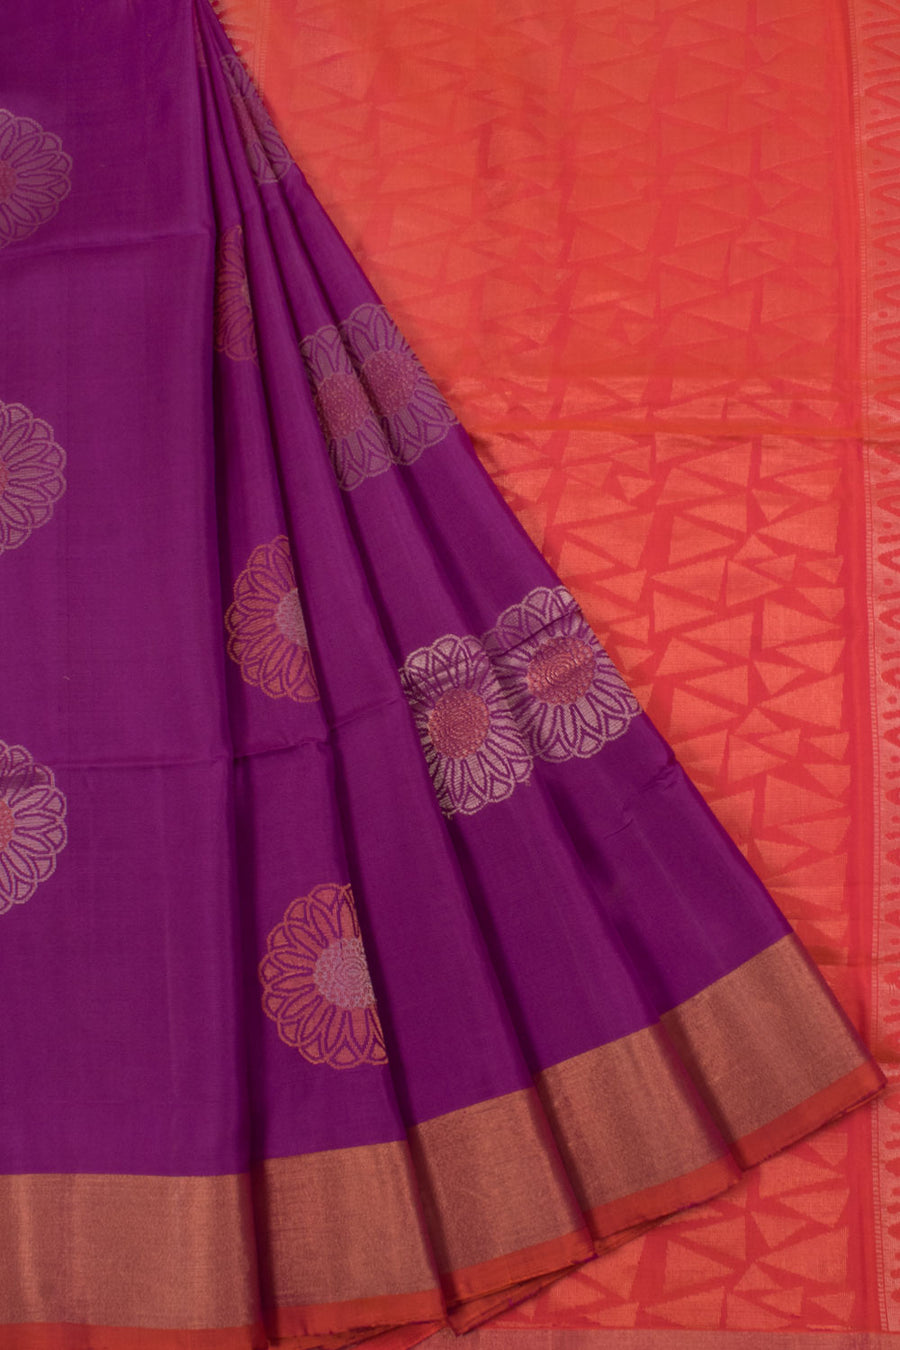 Handloom Kanjivaram Soft Silk Saree with Silver, Copper Coloured Zari Floral Motifs